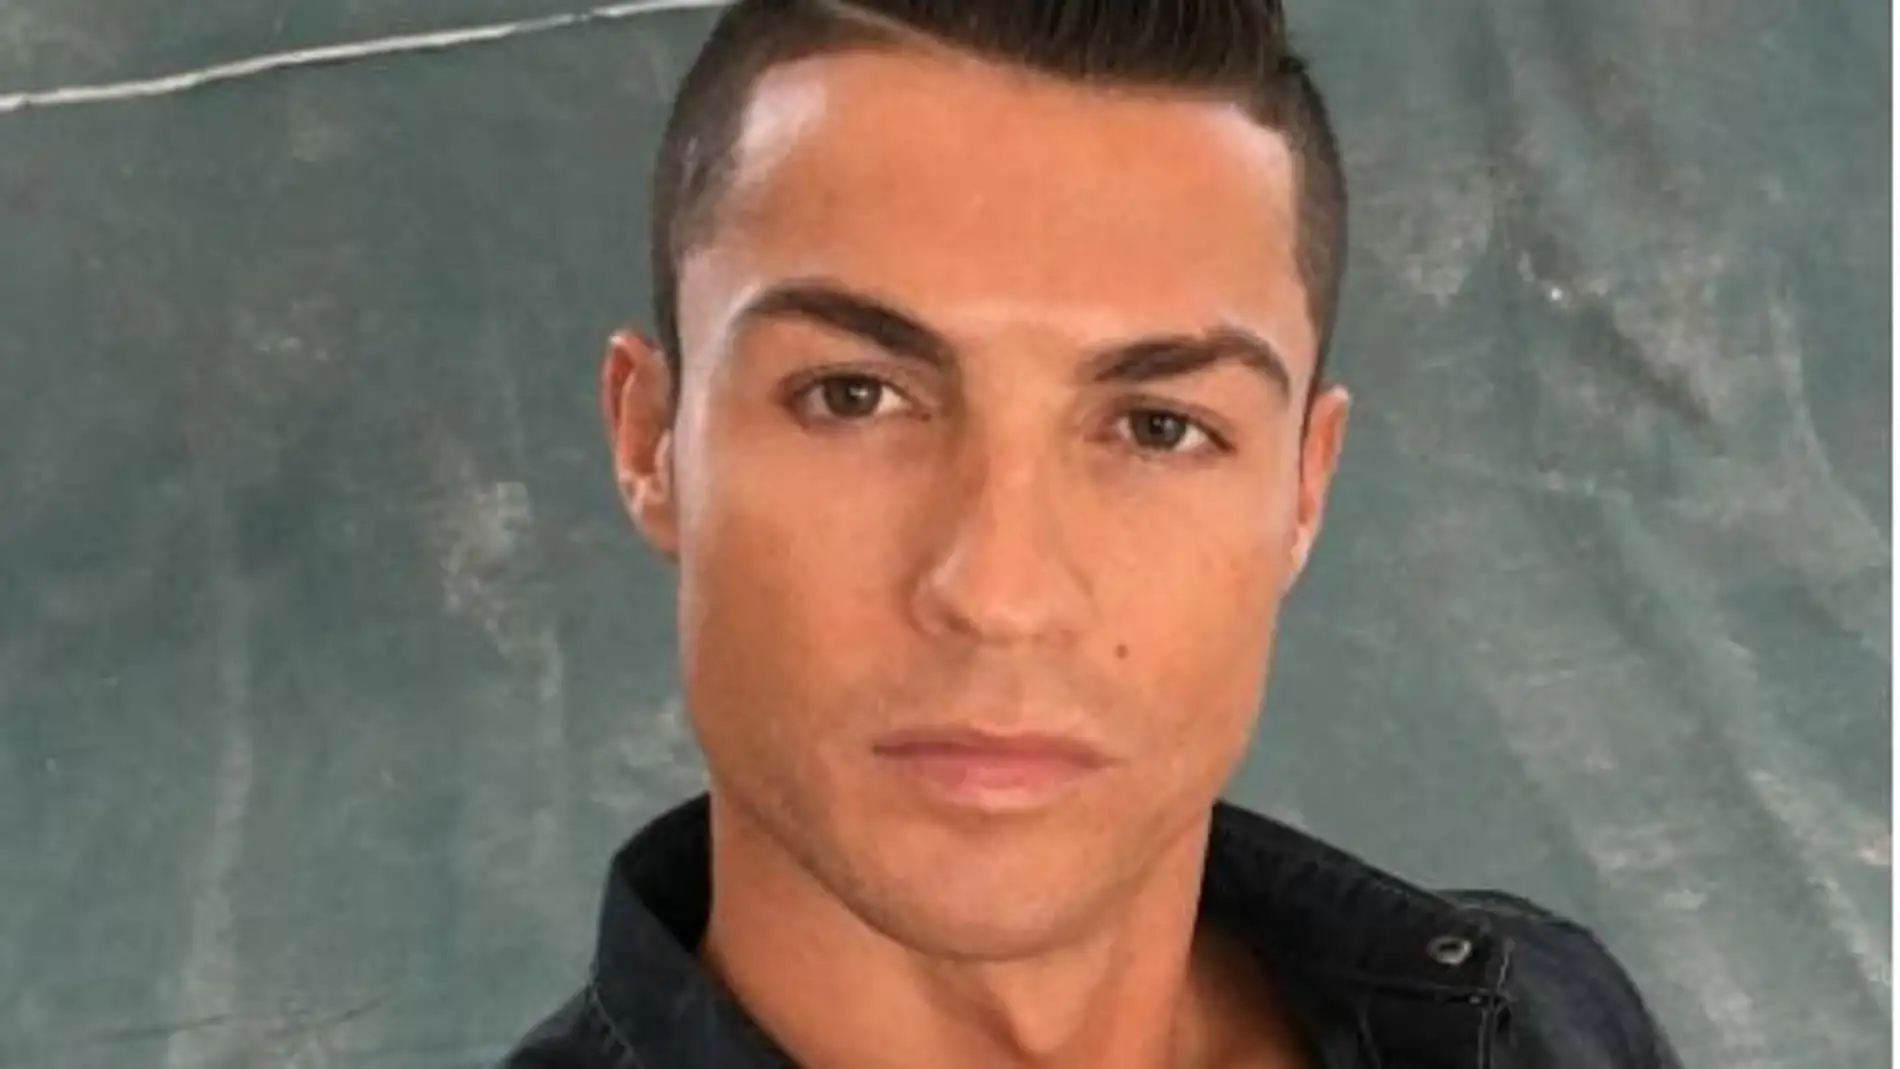 Cristiano Ronaldo, jugador del Real Madrid